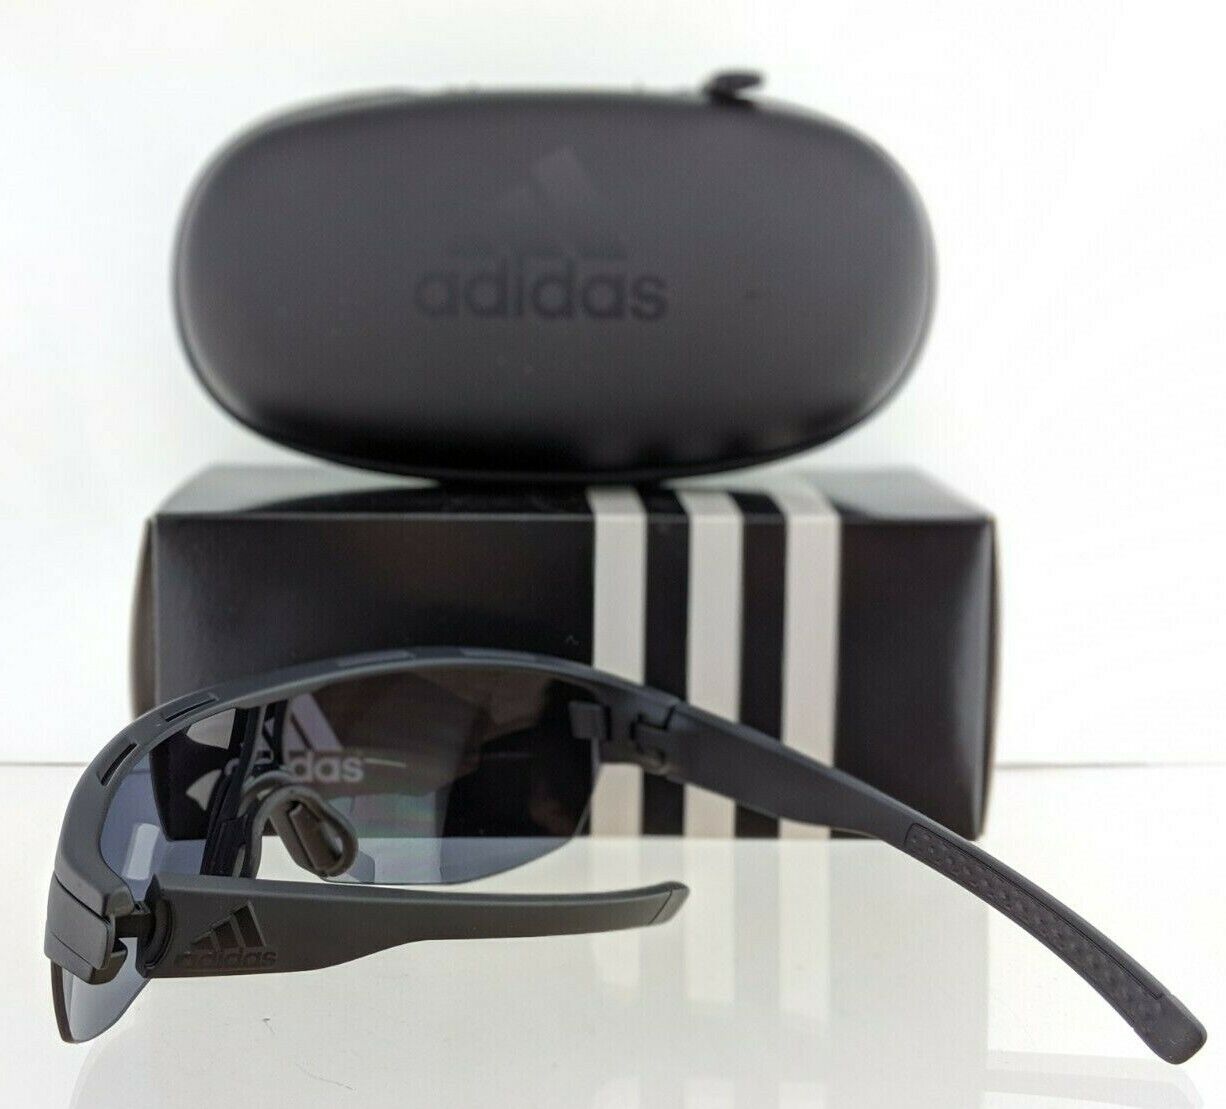 Brand New Authentic Adidas Sunglasses AD 12 75 9600 Zonyk Aero Midcut Basic AD12